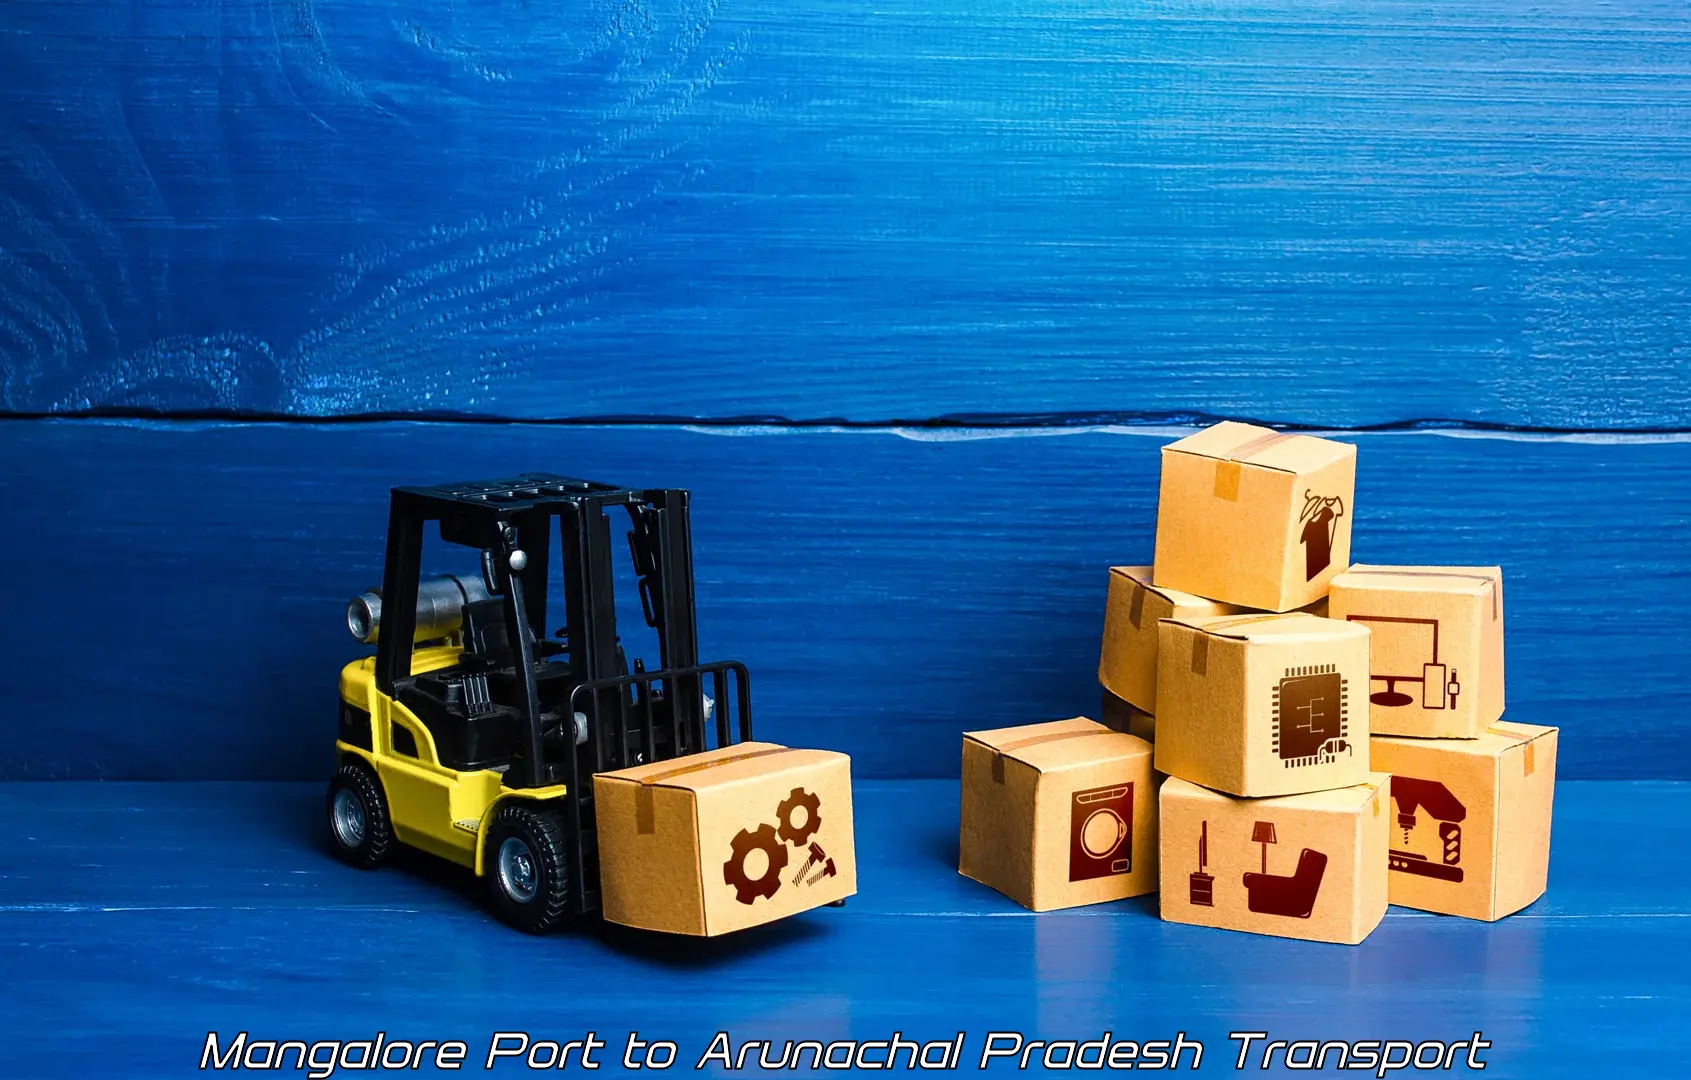 Delivery service Mangalore Port to Arunachal Pradesh